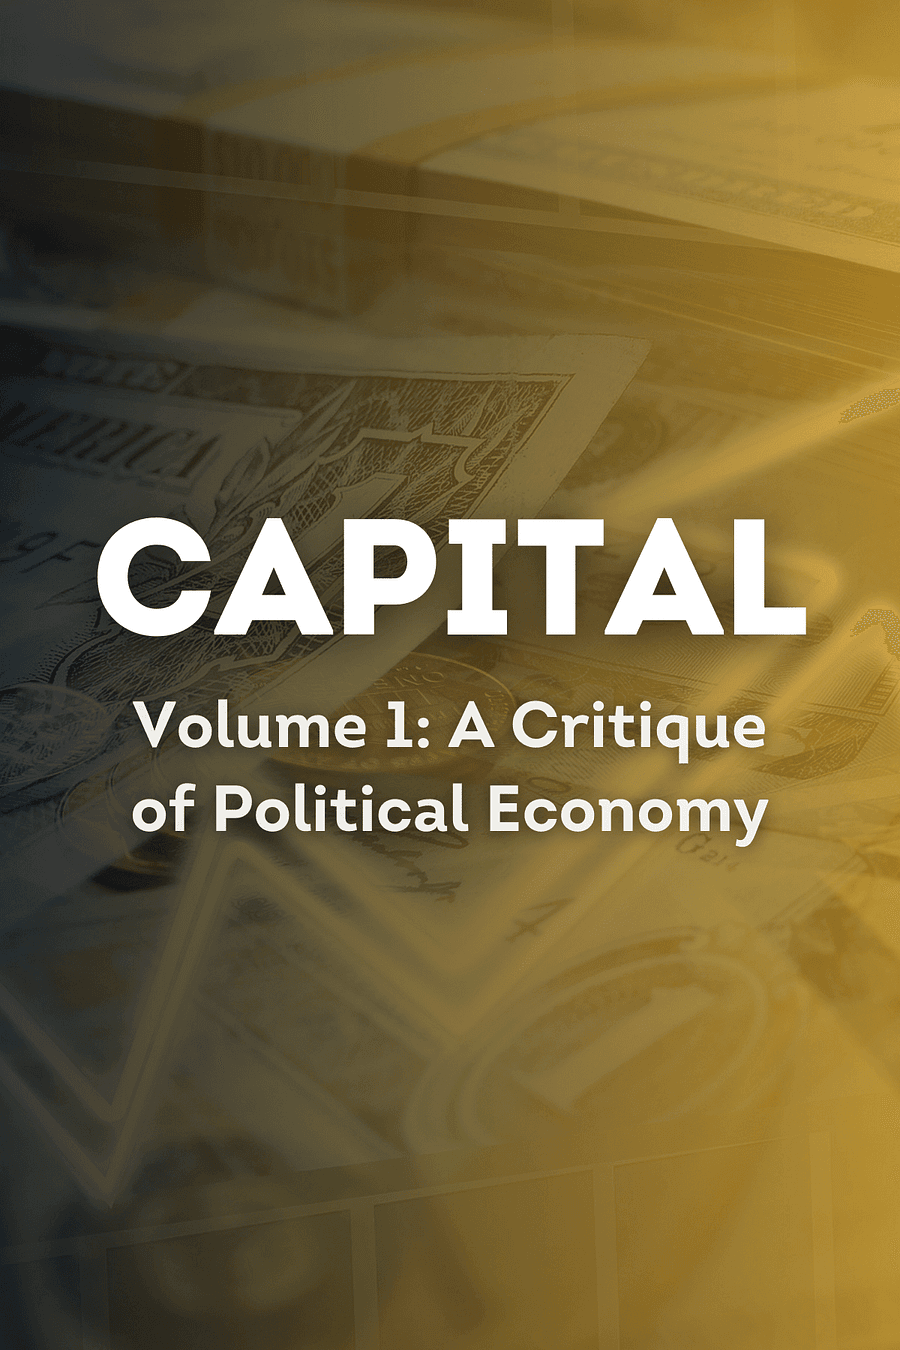 Capital (Volume 1 by Karl Marx - Book Summary